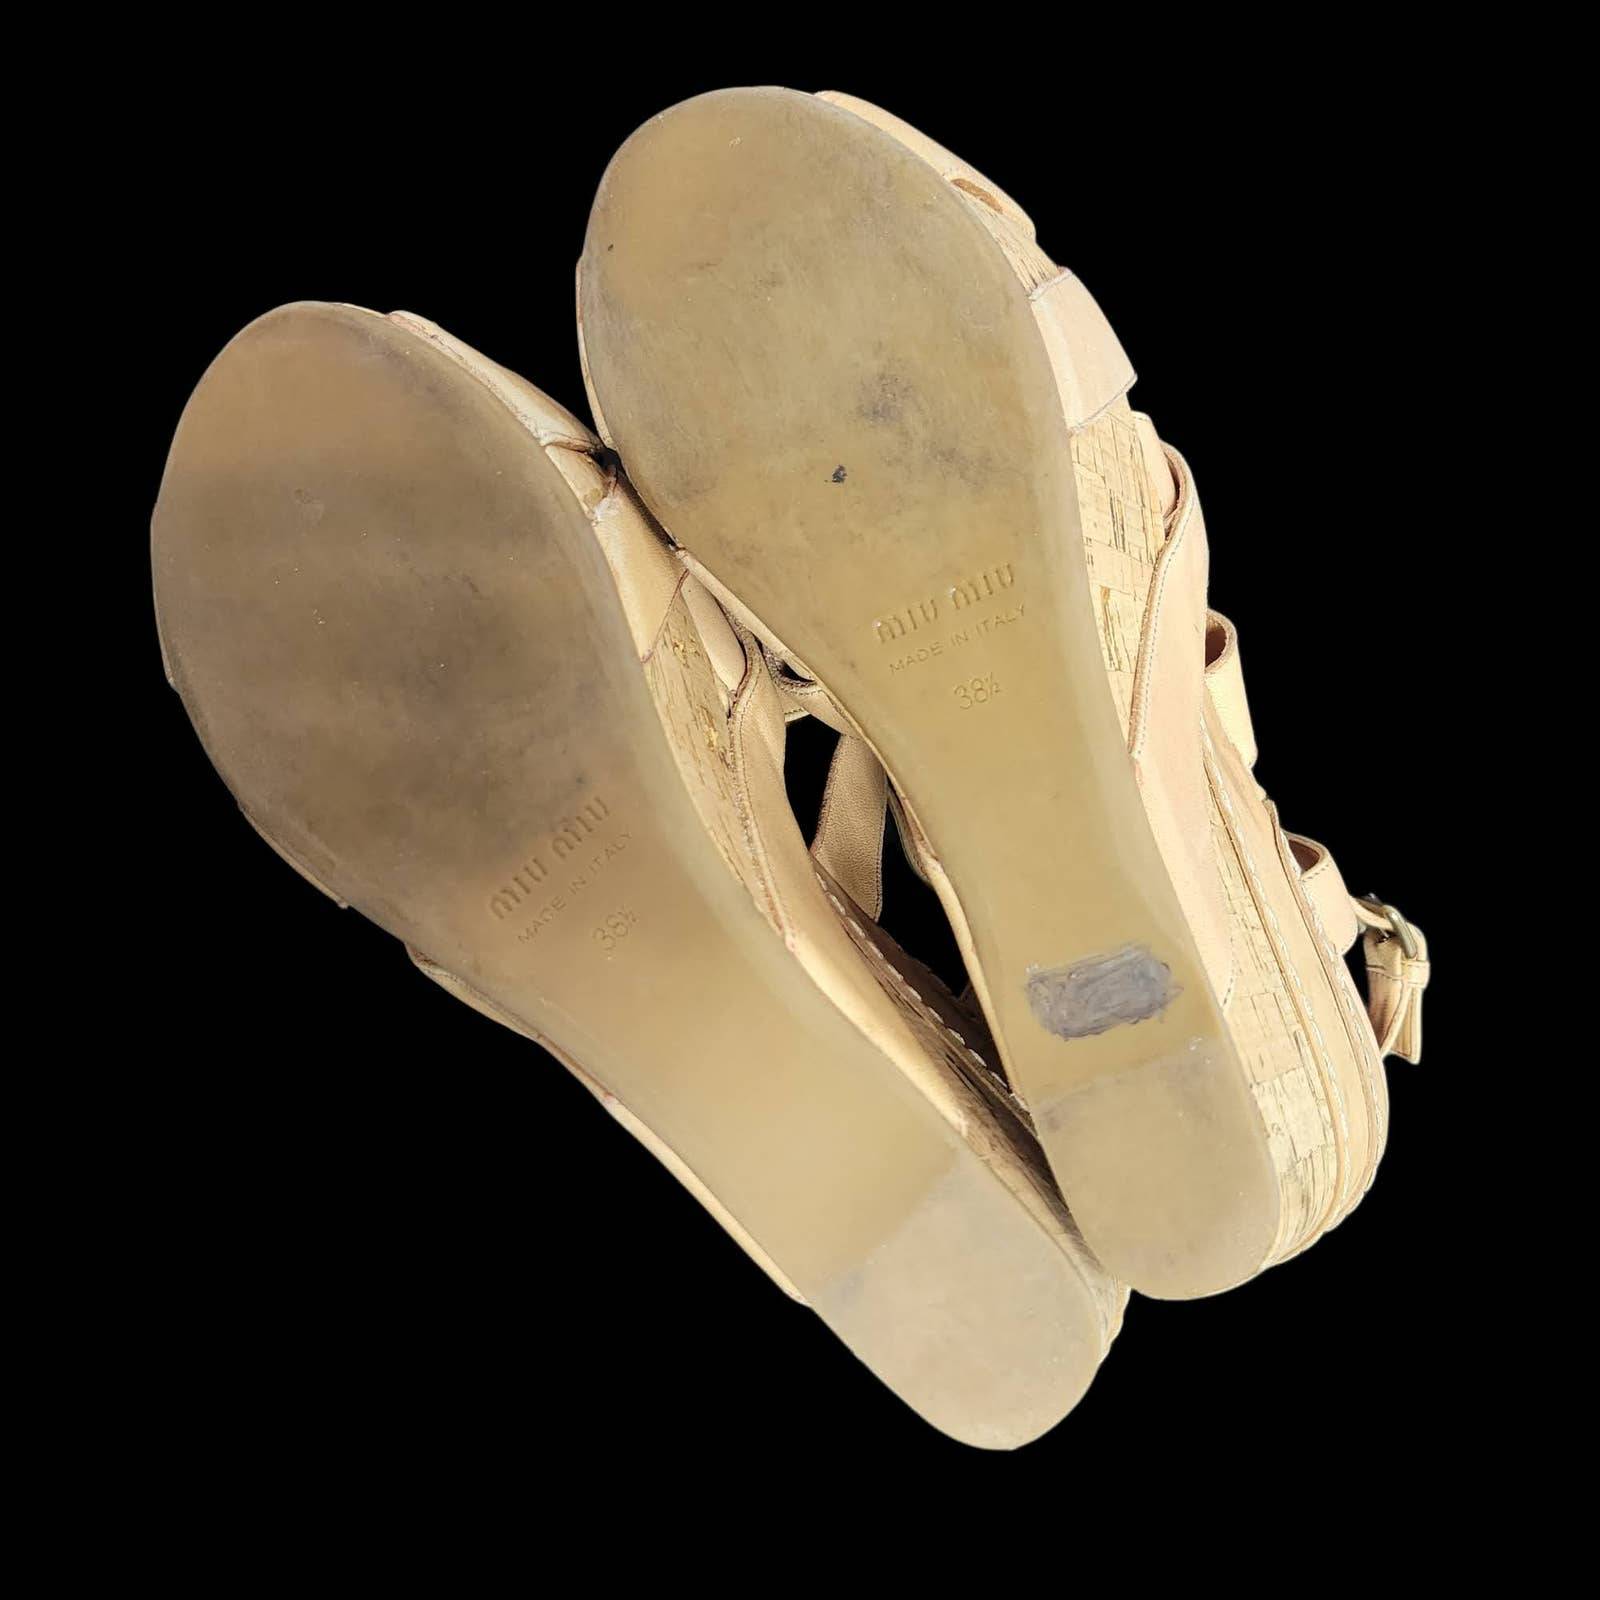 Miu Miu Platform Sandals Chunky Cork Wedge Heel Tan Leather Open Toe Size 8.5